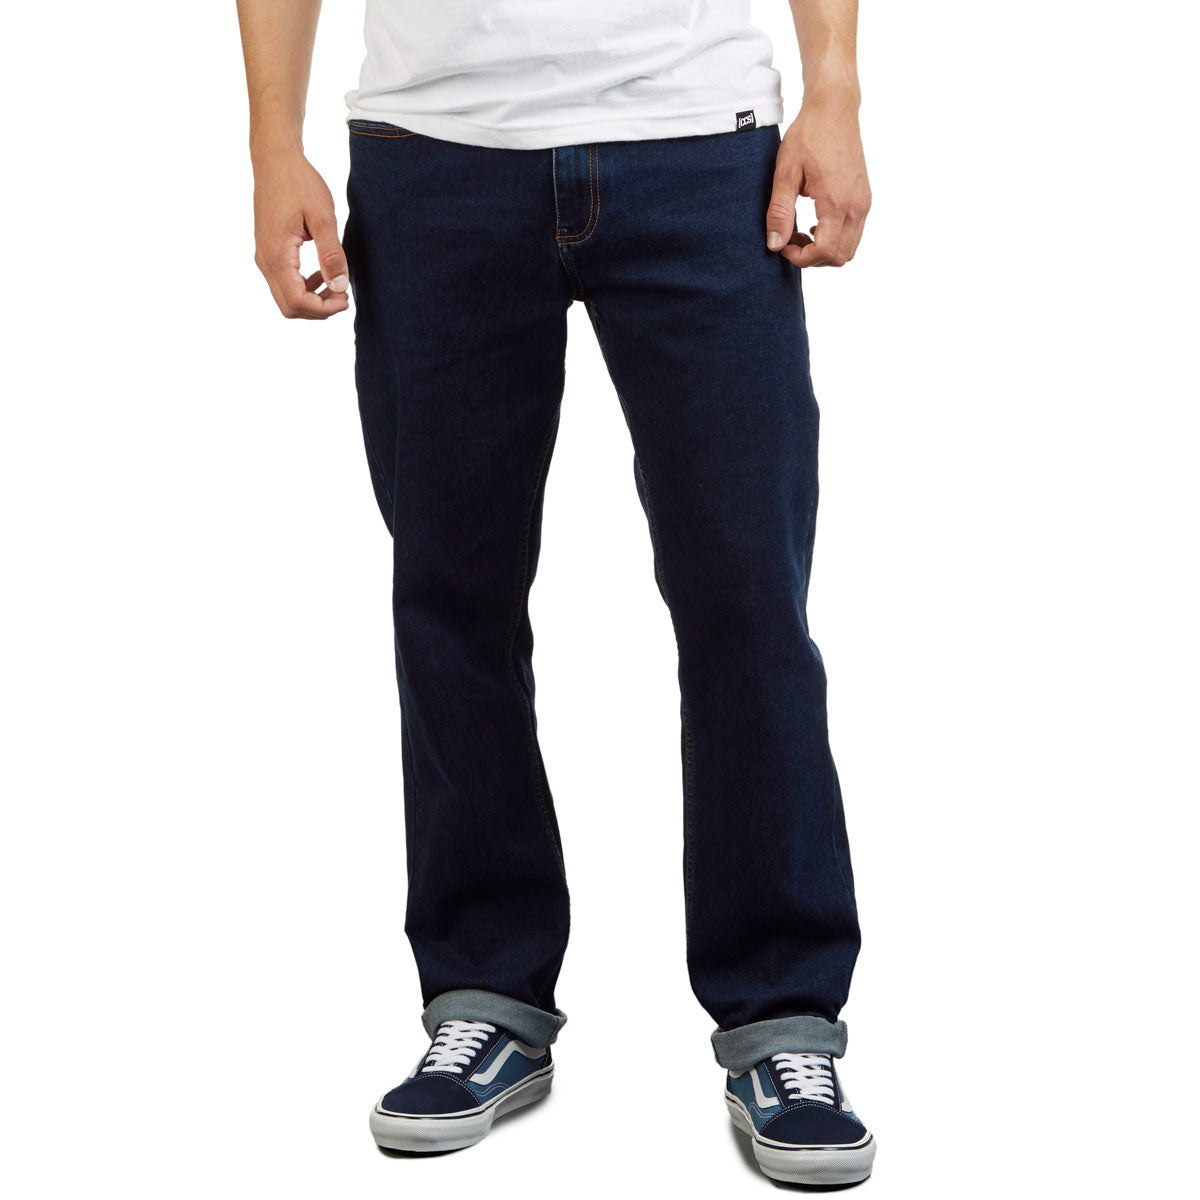 CCS Standard Plus Relaxed Denim Jeans - Indigo image 4